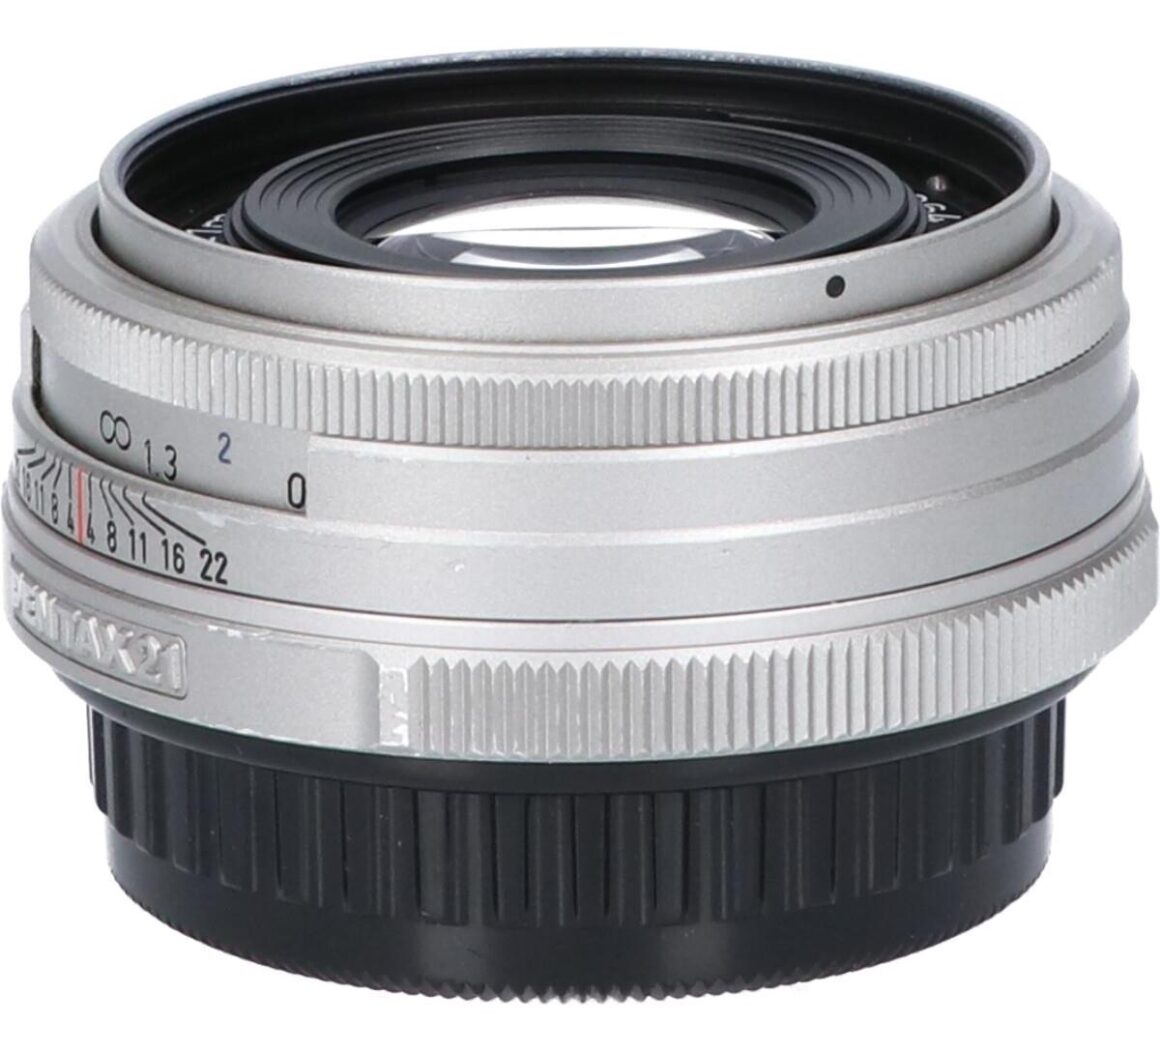 Pentax HD DA Limited 21mm F3.2 AL Wide Angle Lens - Silver